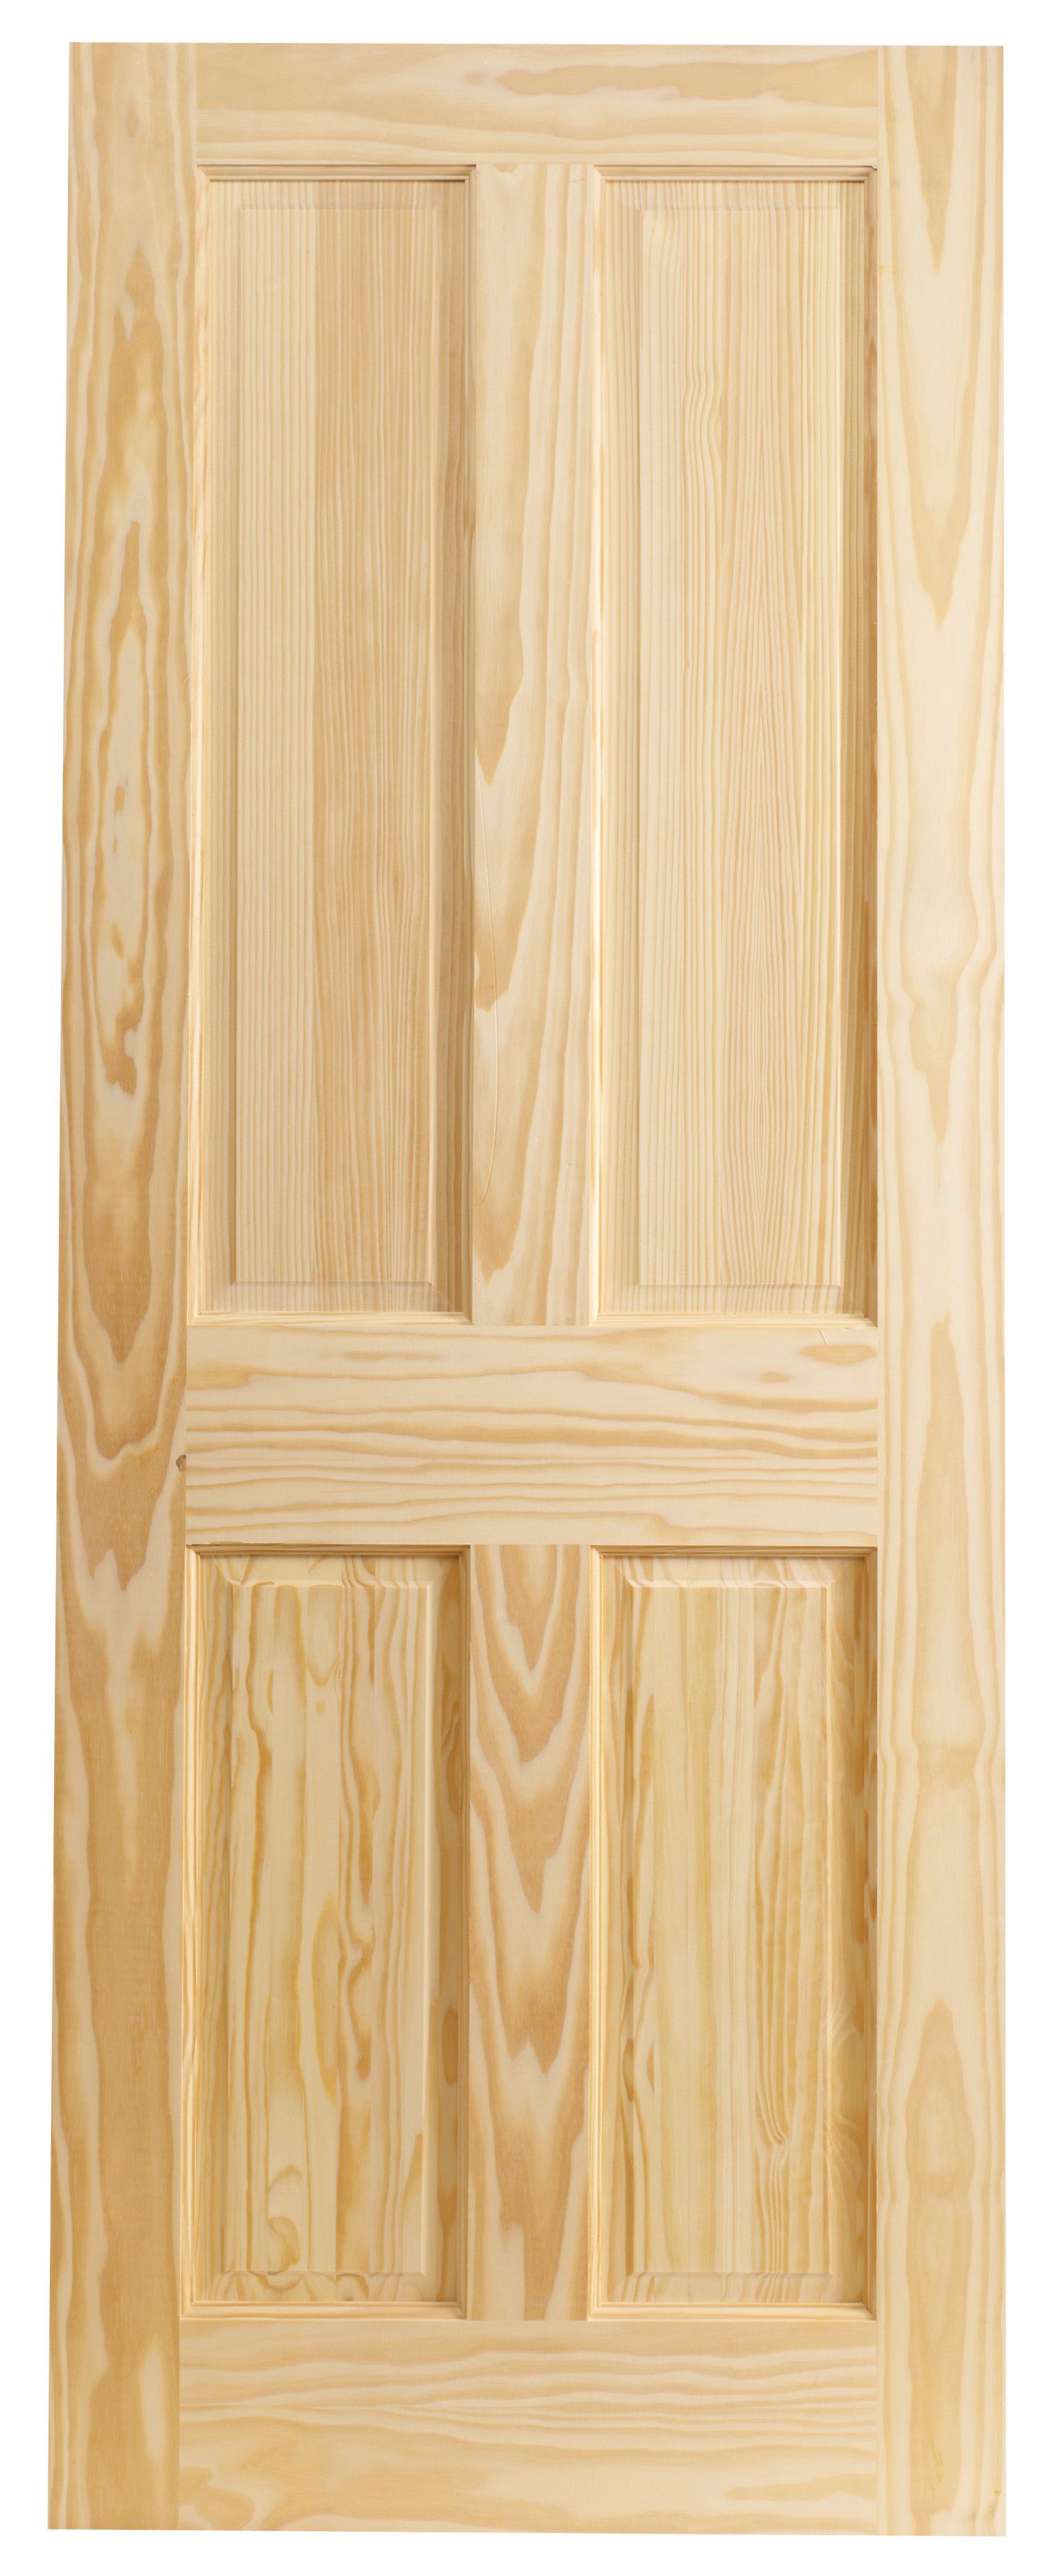 Wickes Skipton Clear Pine 4 Panel Internal Fire Door - 1981mm x 762mm